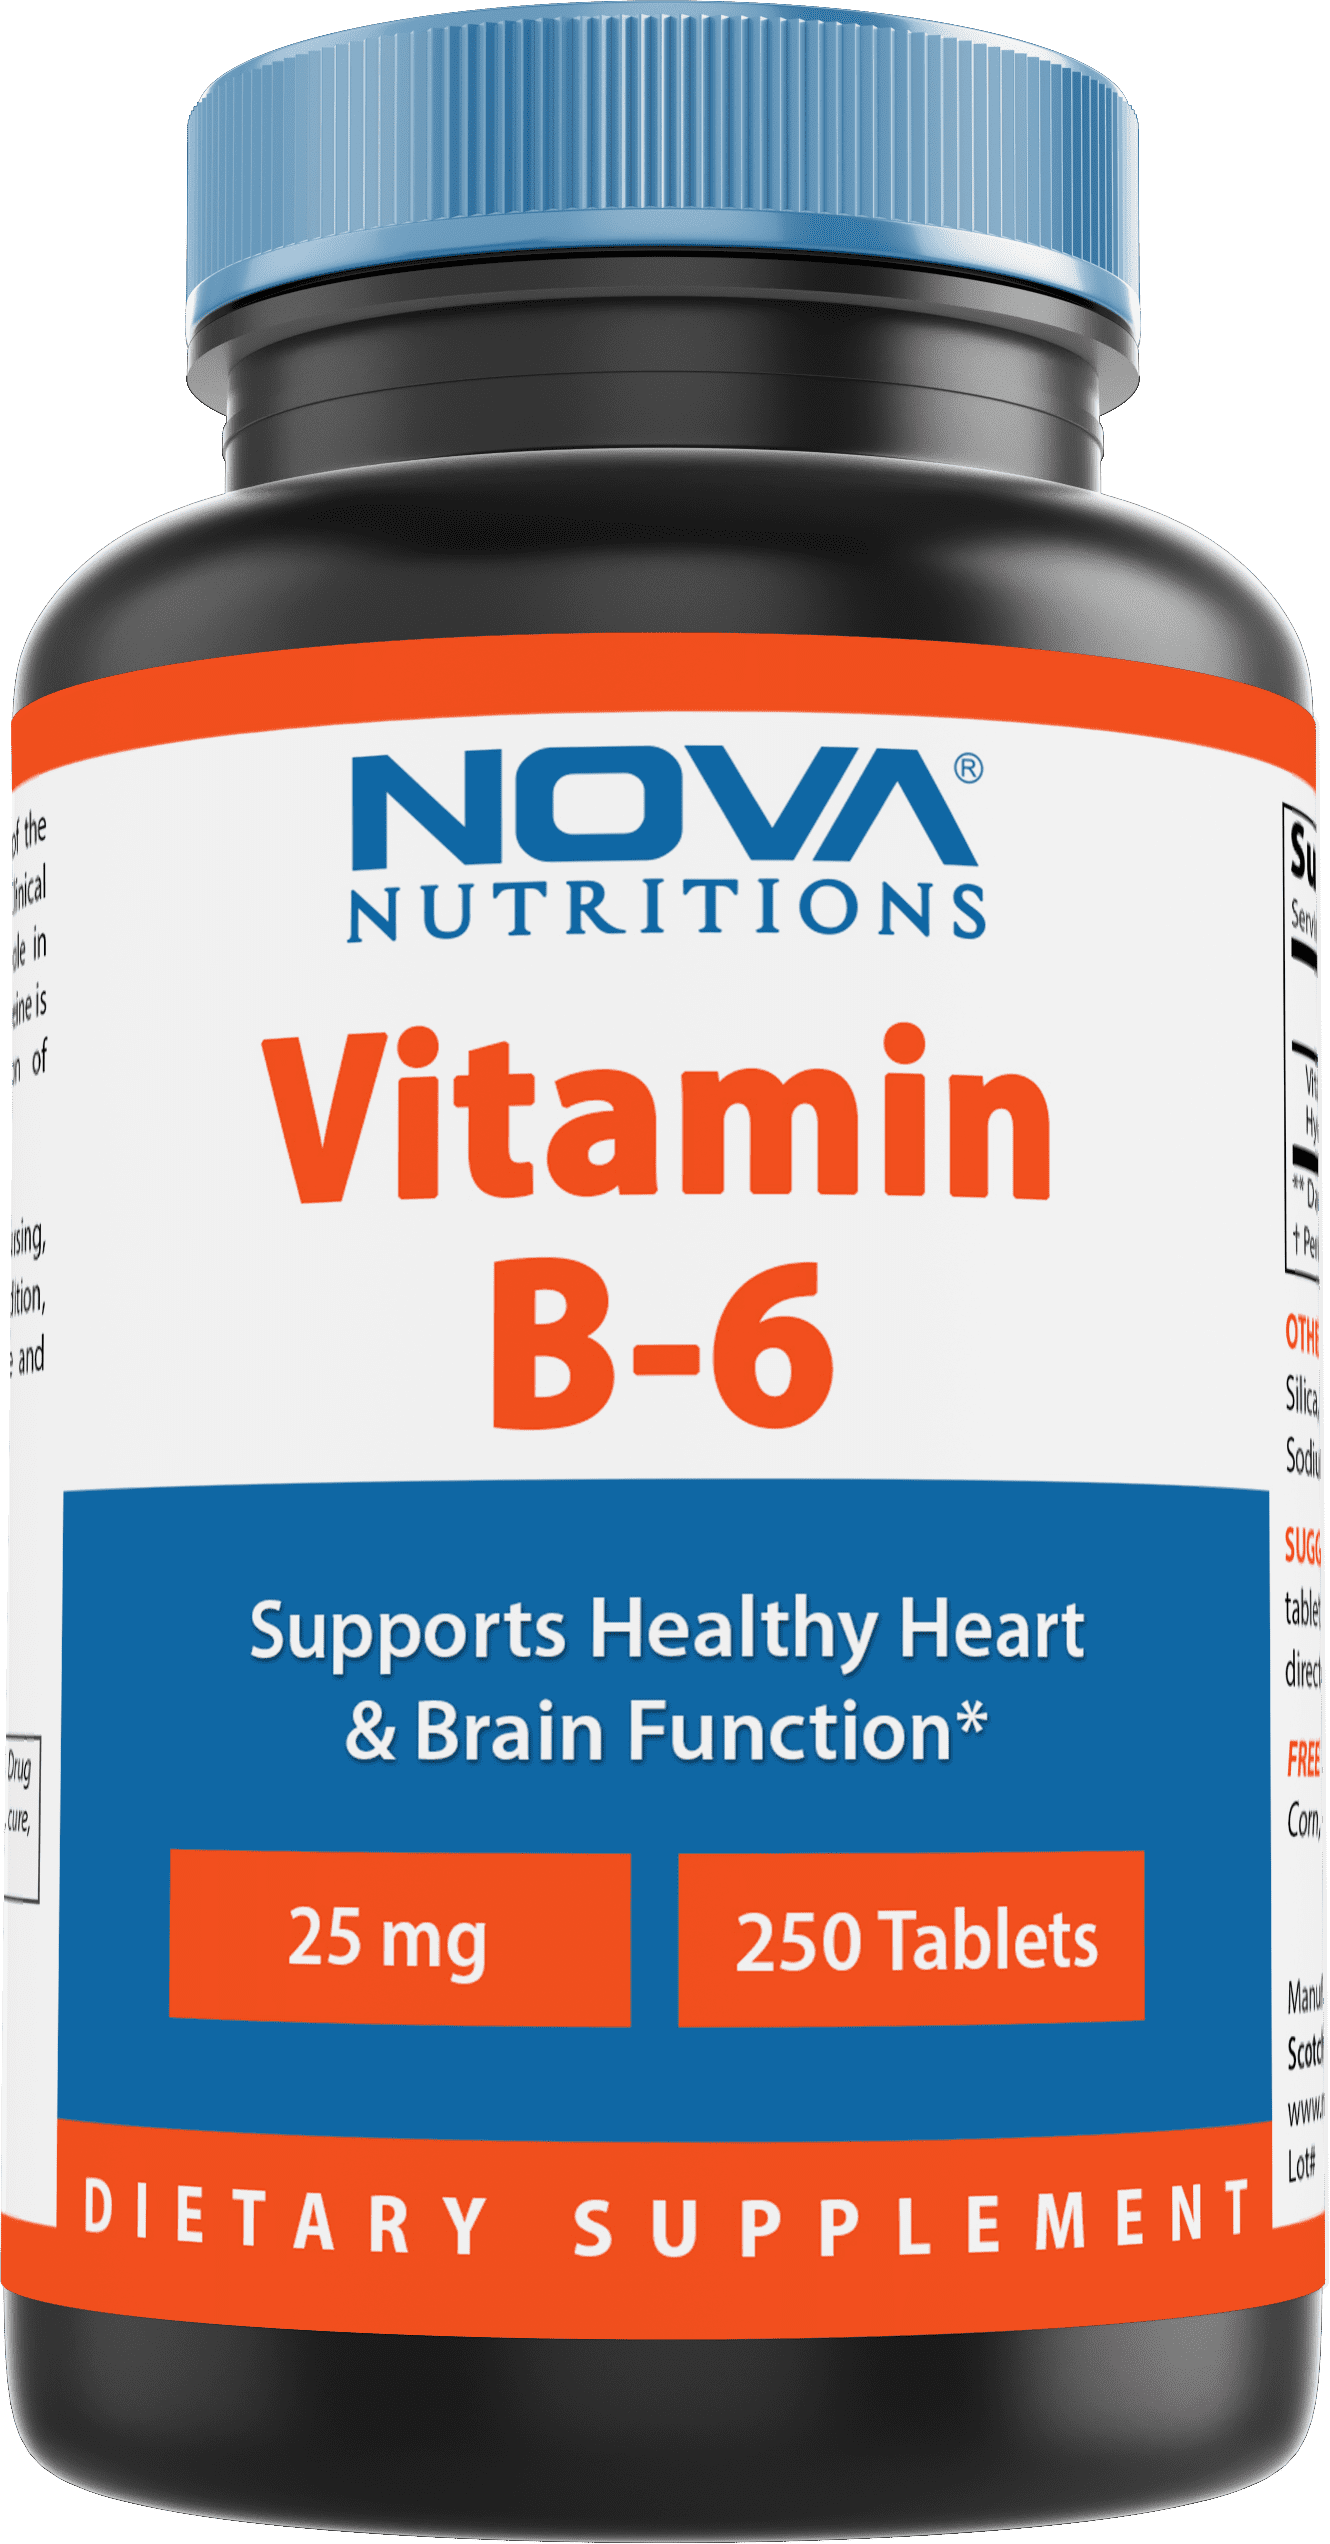 Nova Nutritions Vitamin B6 25 mg